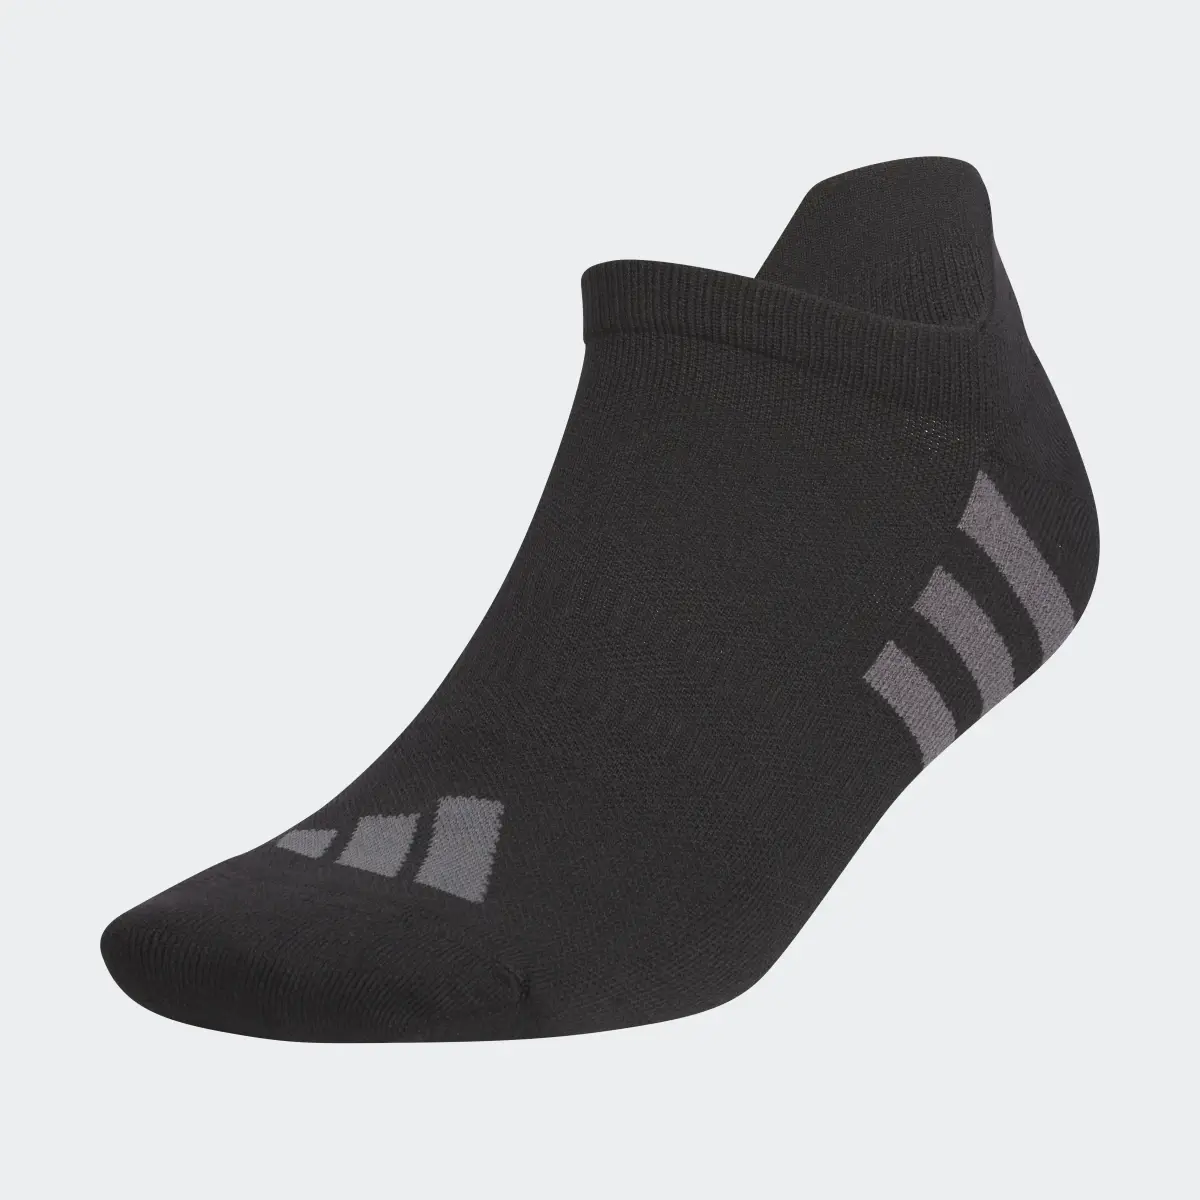 Adidas Tour Ankle Socks. 2